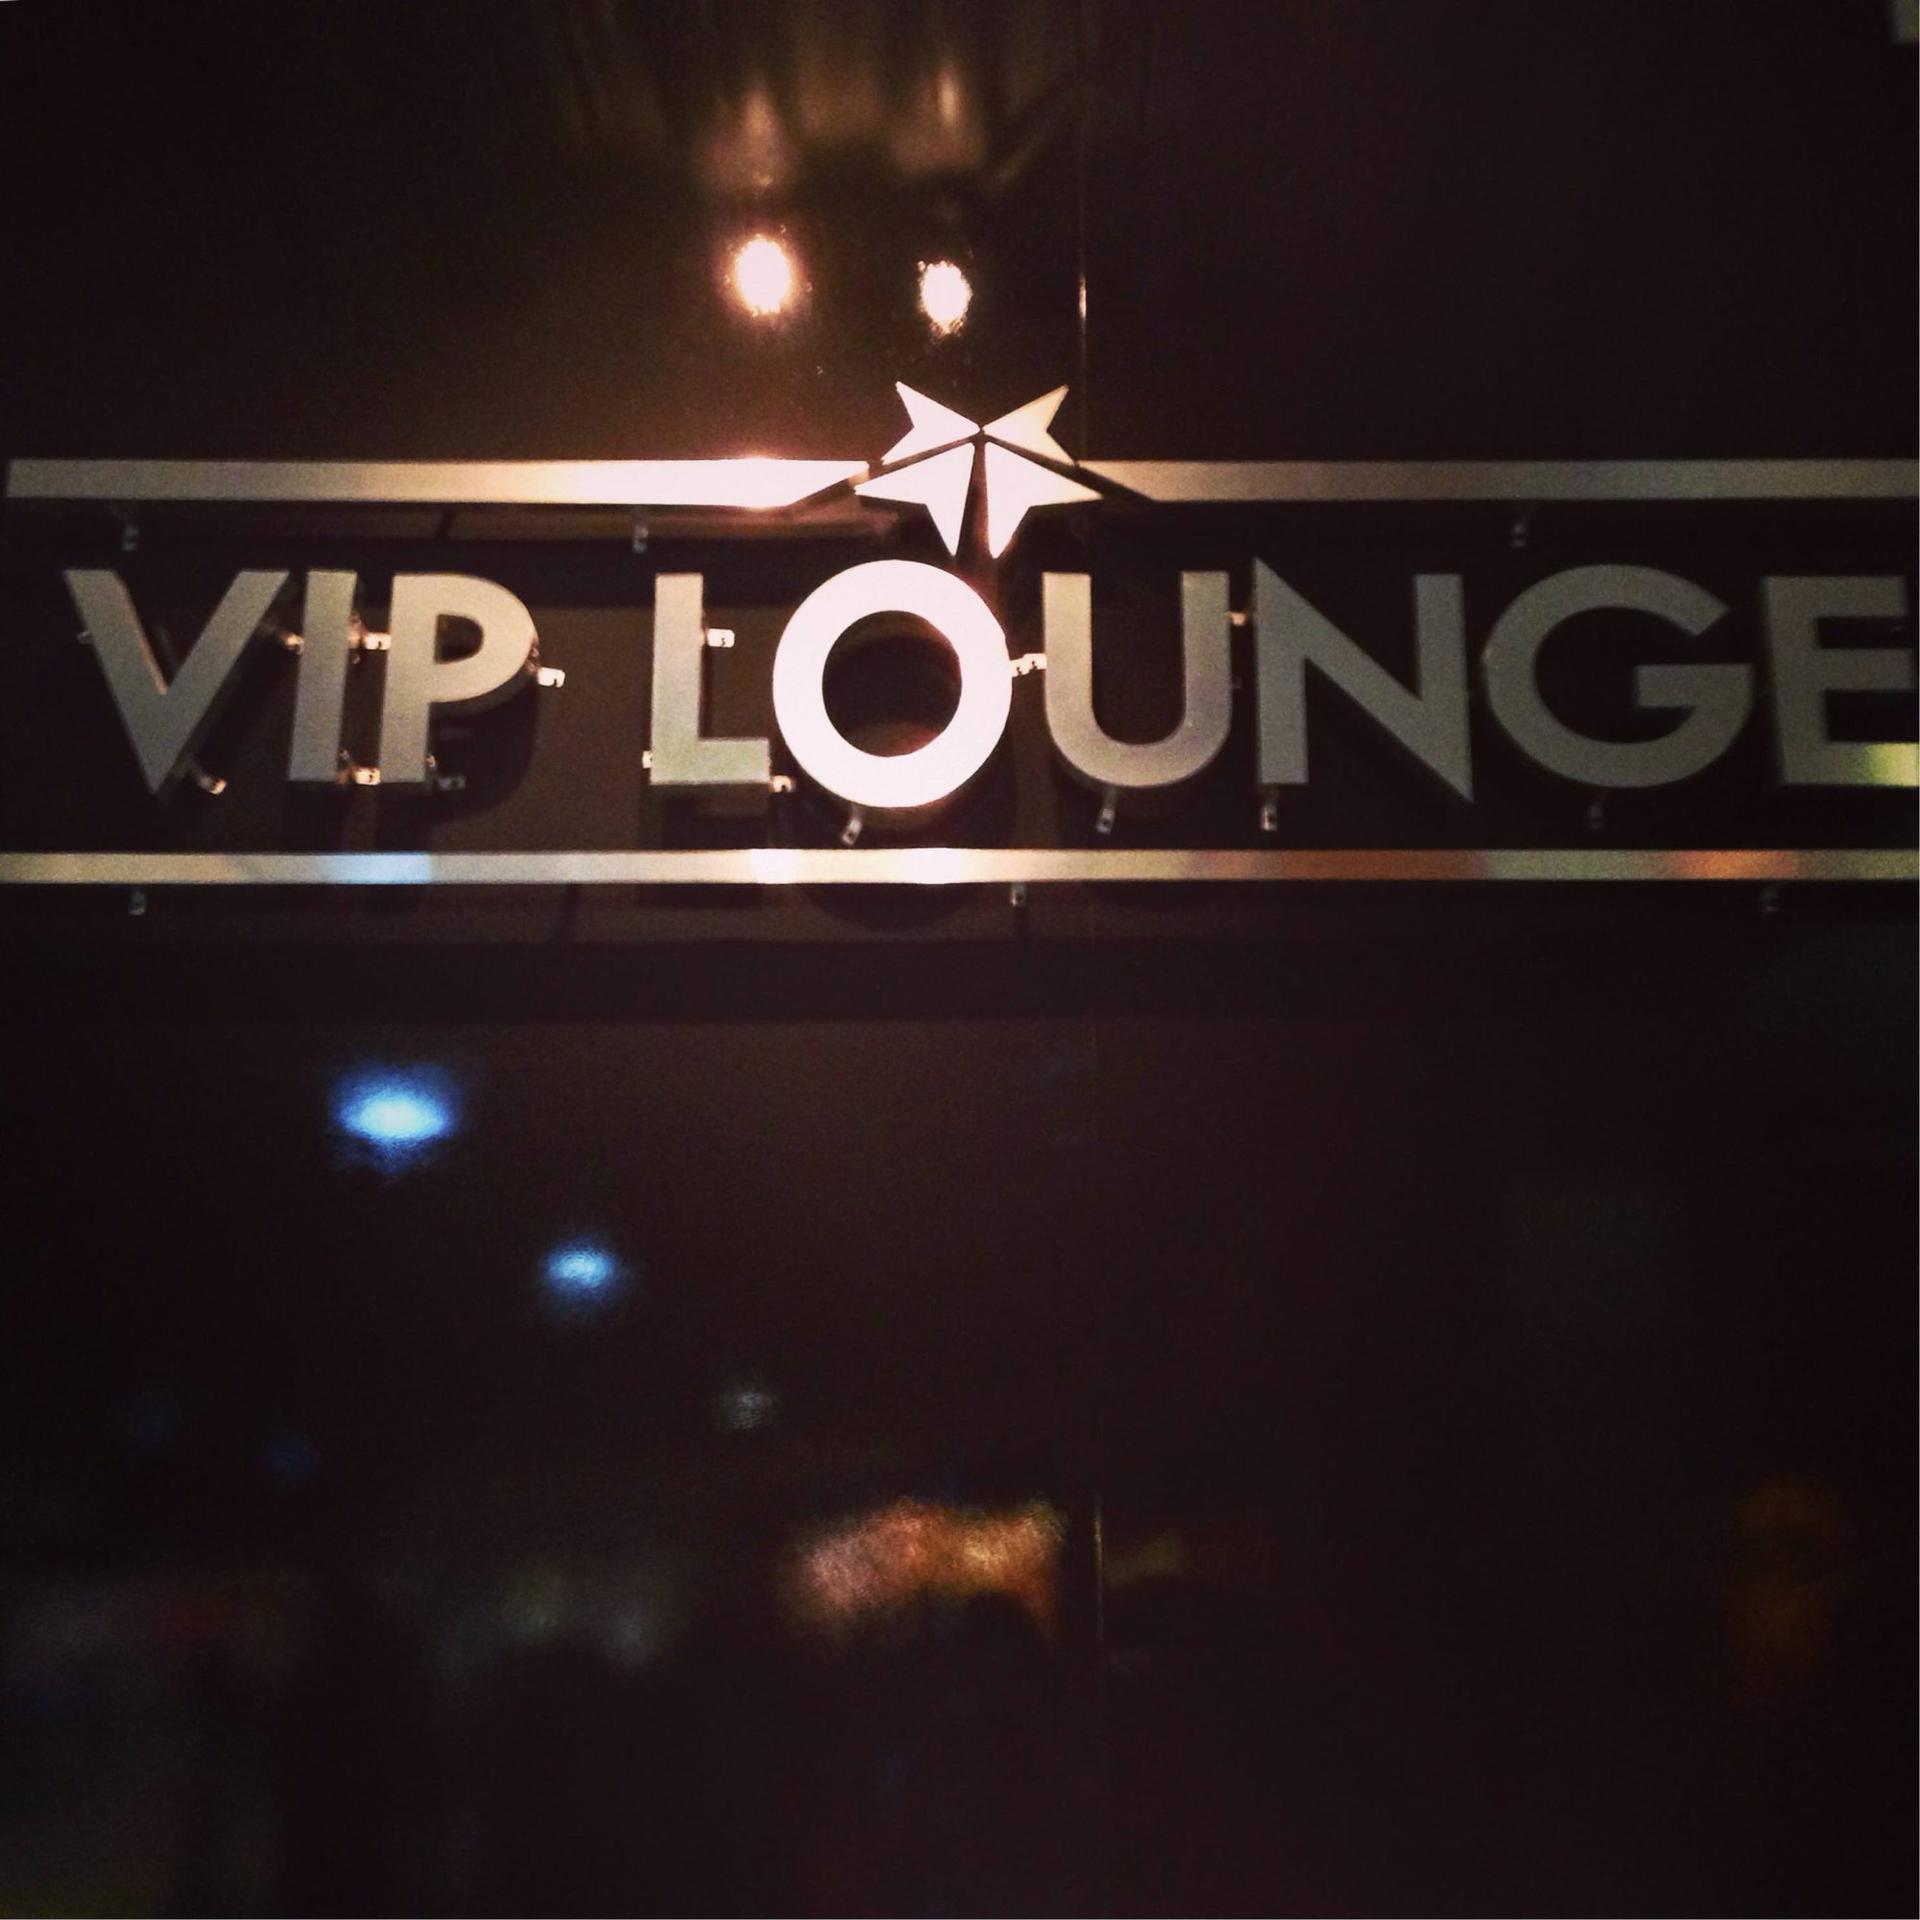 VIP Lounge image 21 of 29